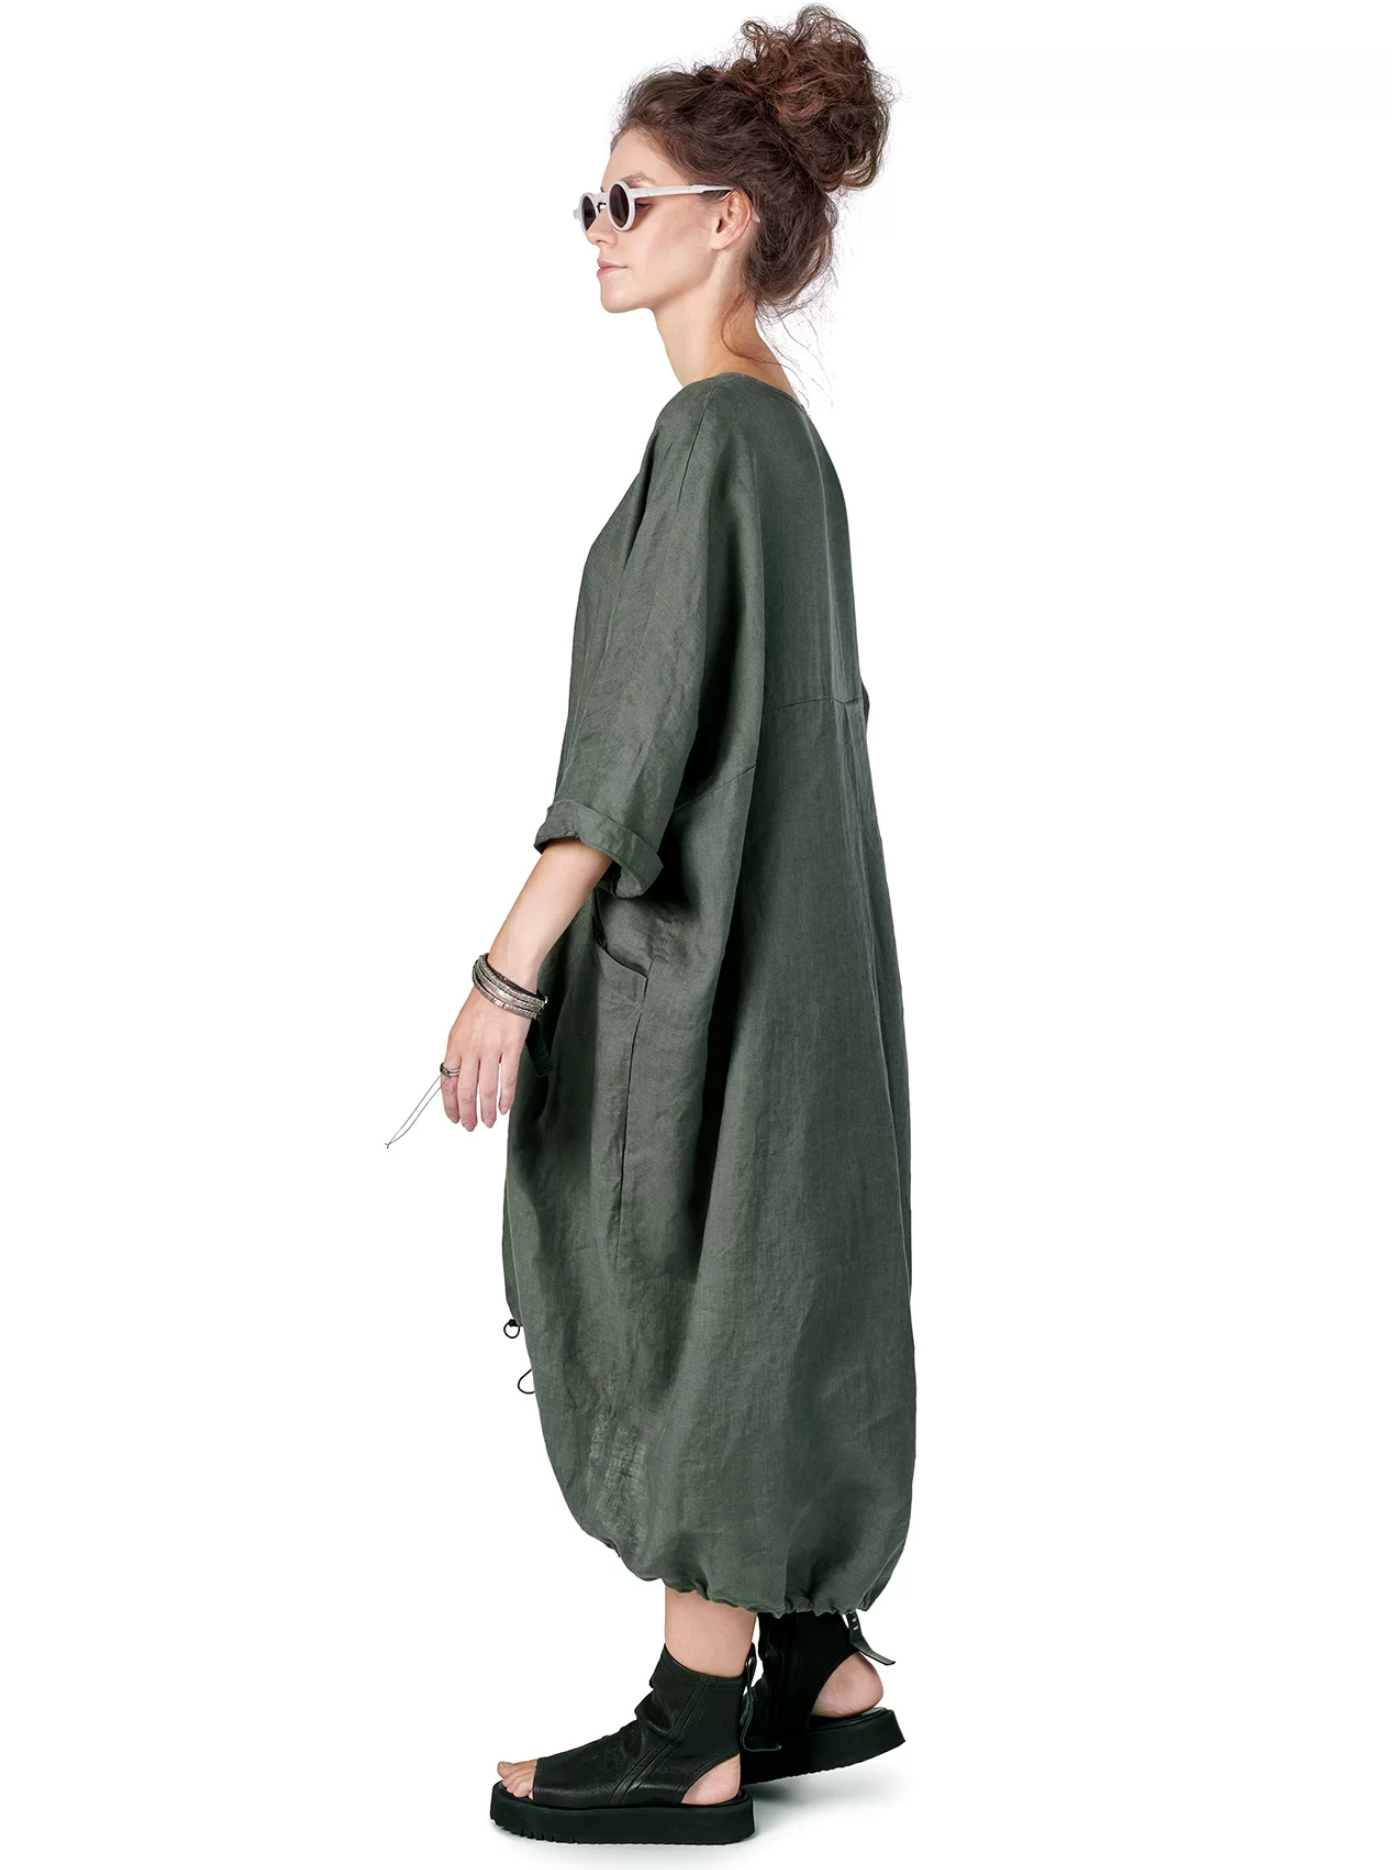 Agath linen oversized dress